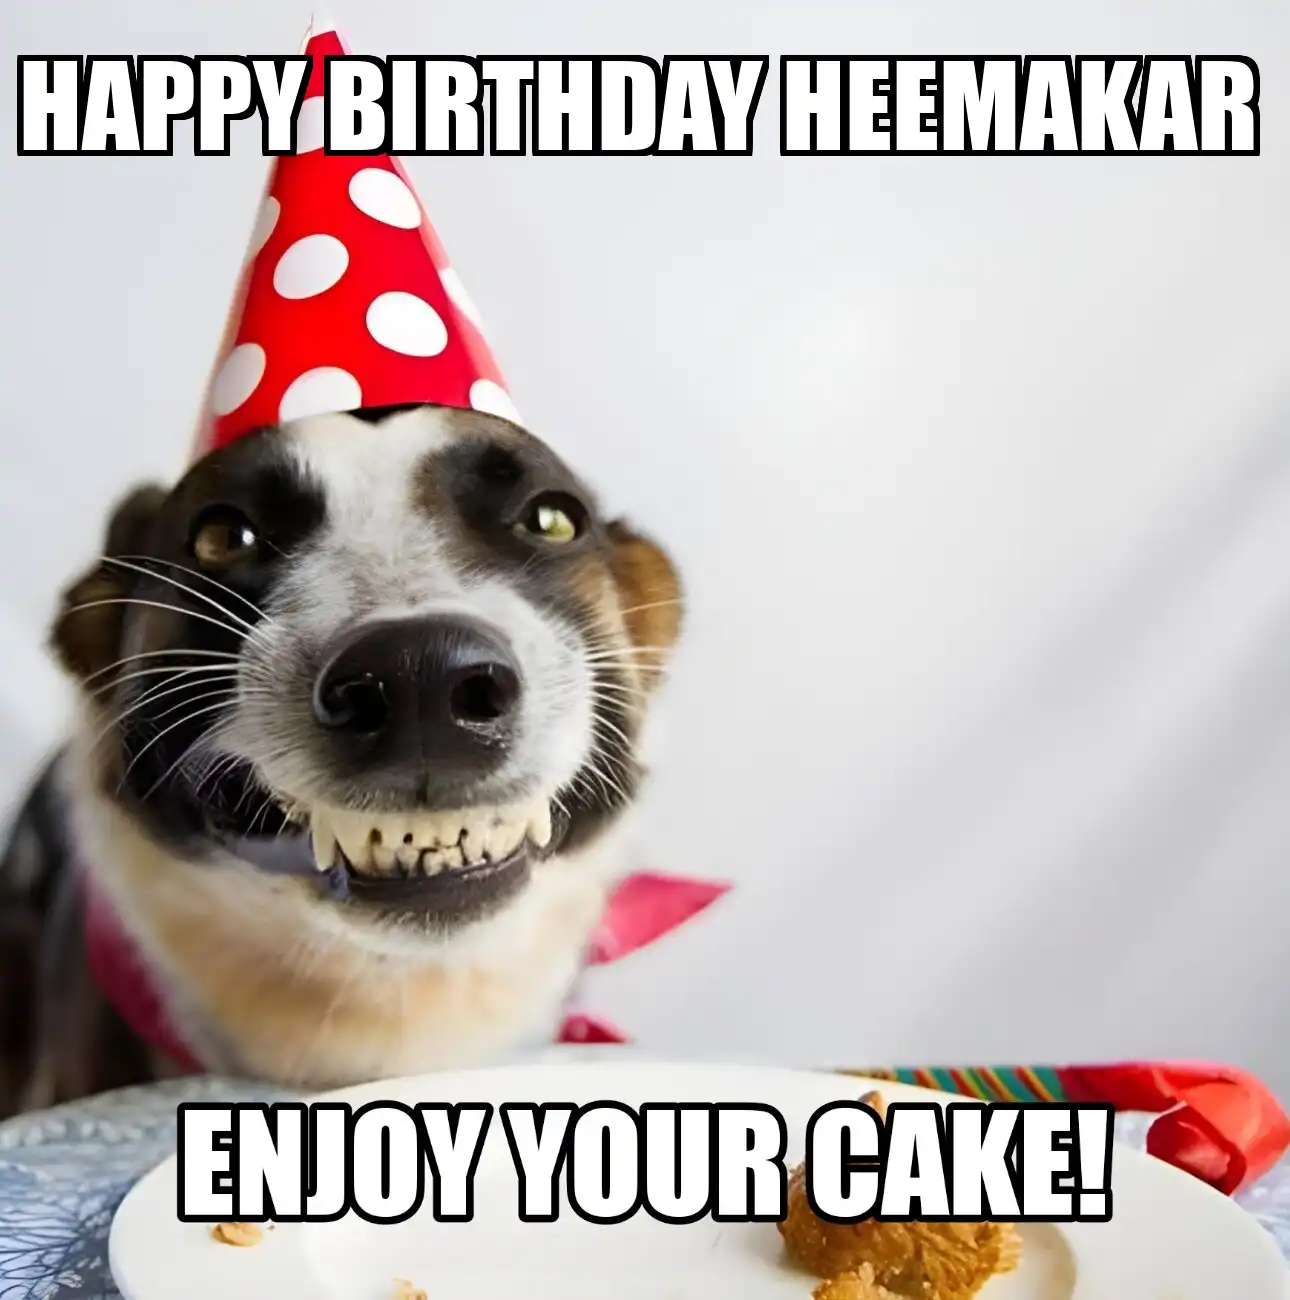 Happy Birthday Heemakar Enjoy Your Cake Dog Meme